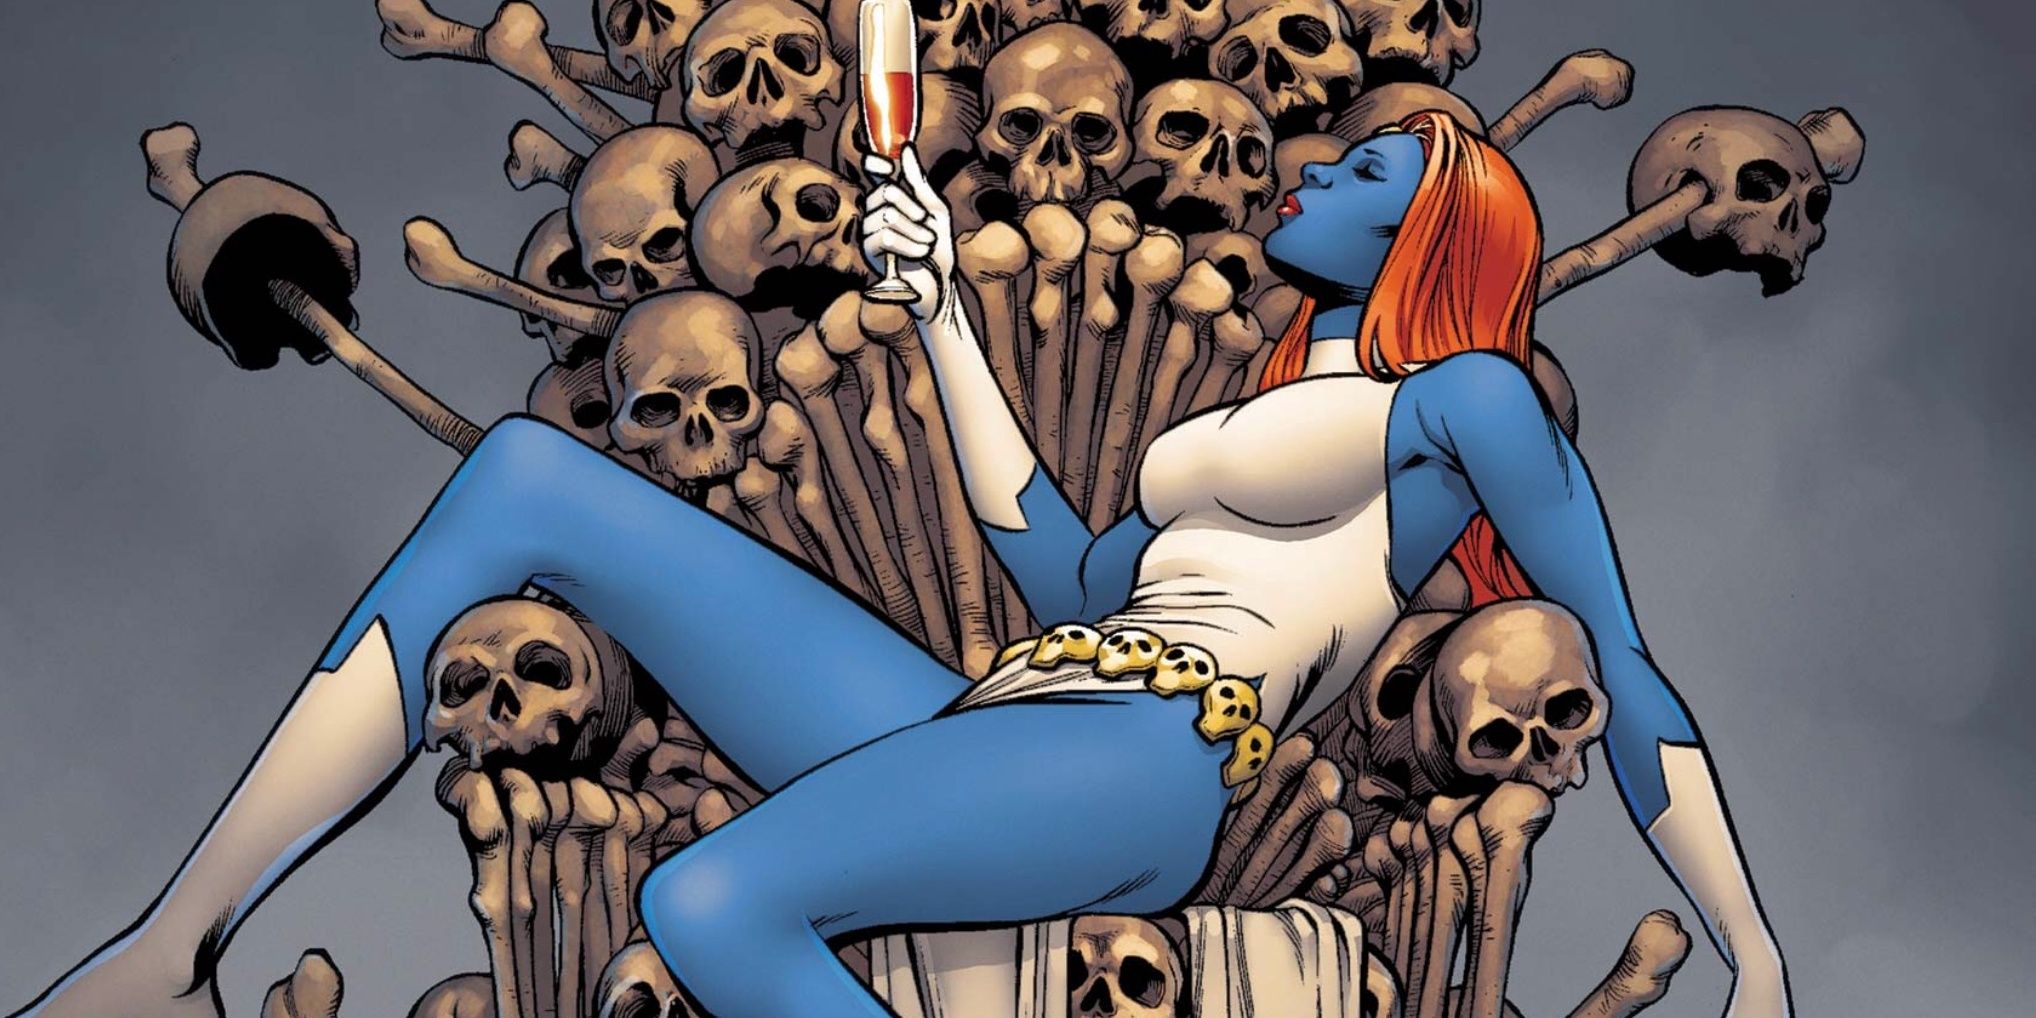 Mystique sitting on a skeleton throne